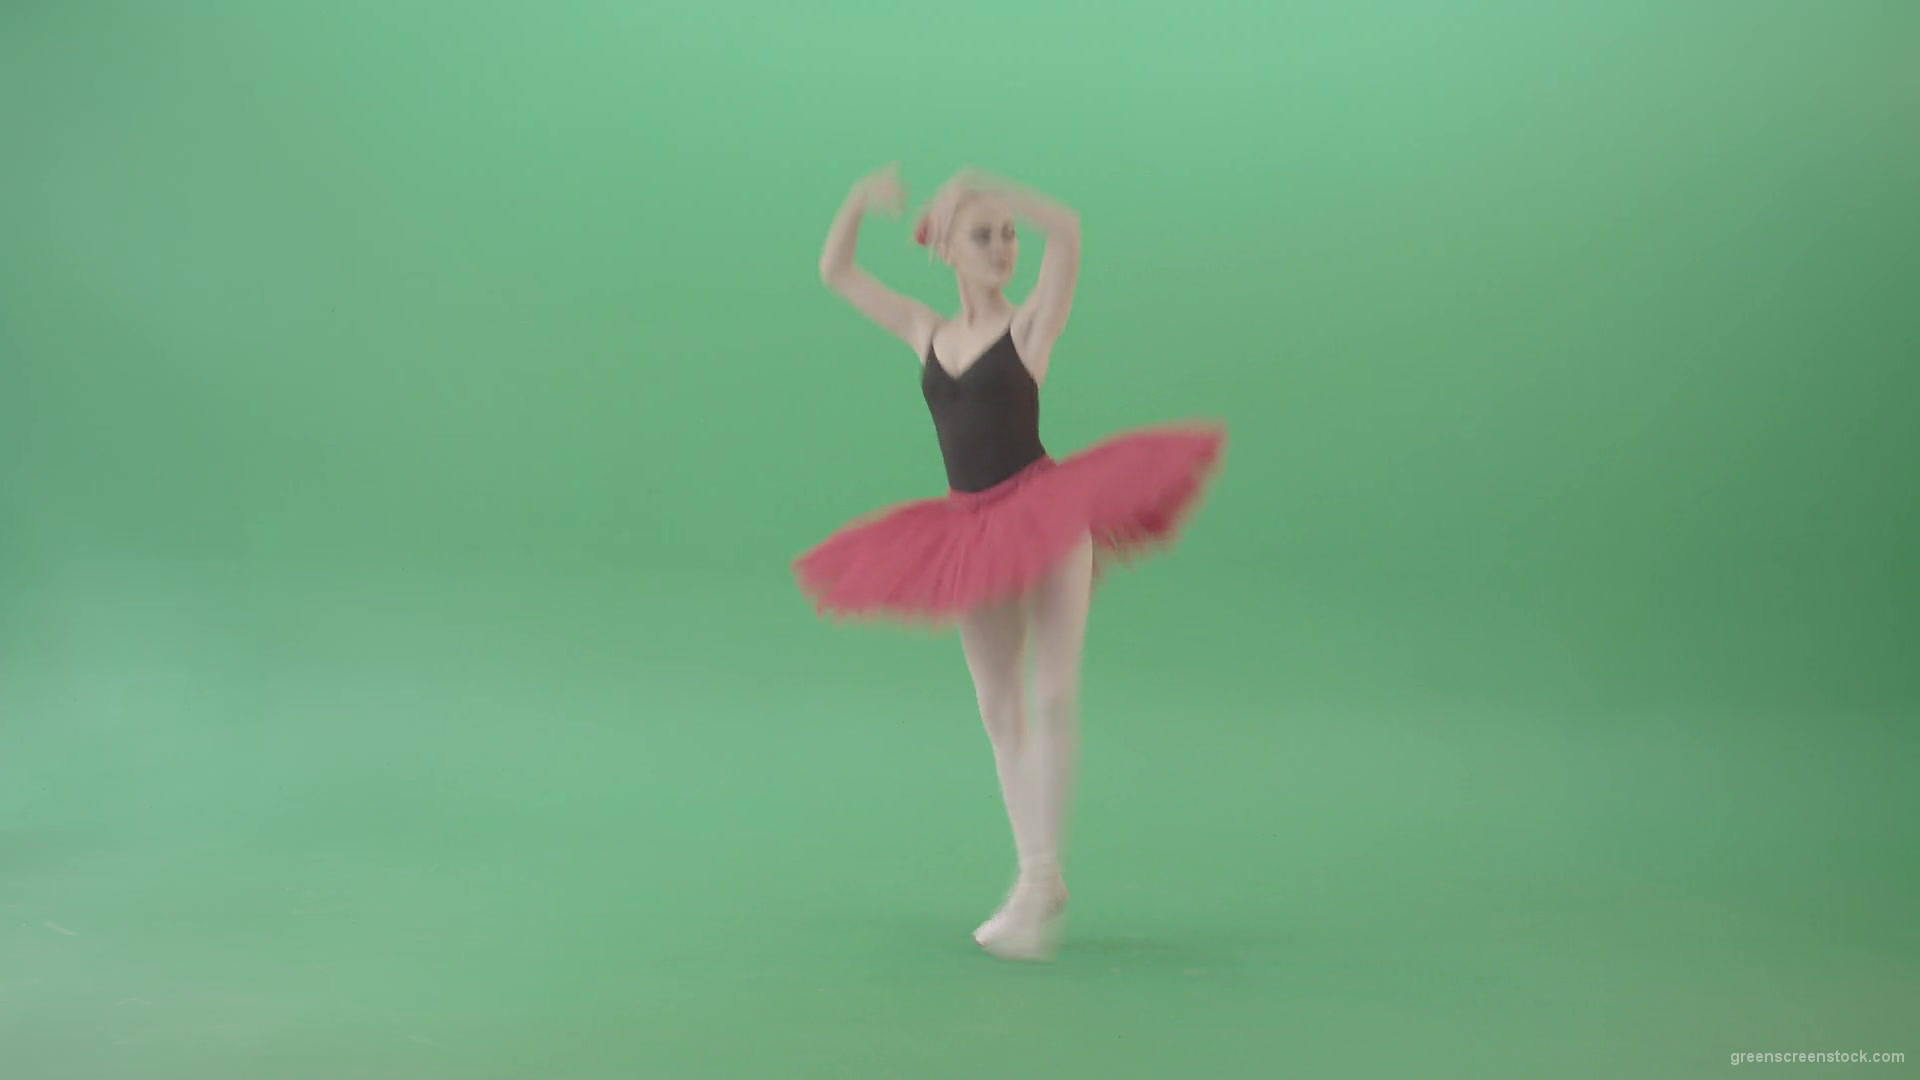 Classical-Ballerina-girl-dancing-red-black-ballet-on-green-screen-4K-Video-Footage-1920_007 Green Screen Stock